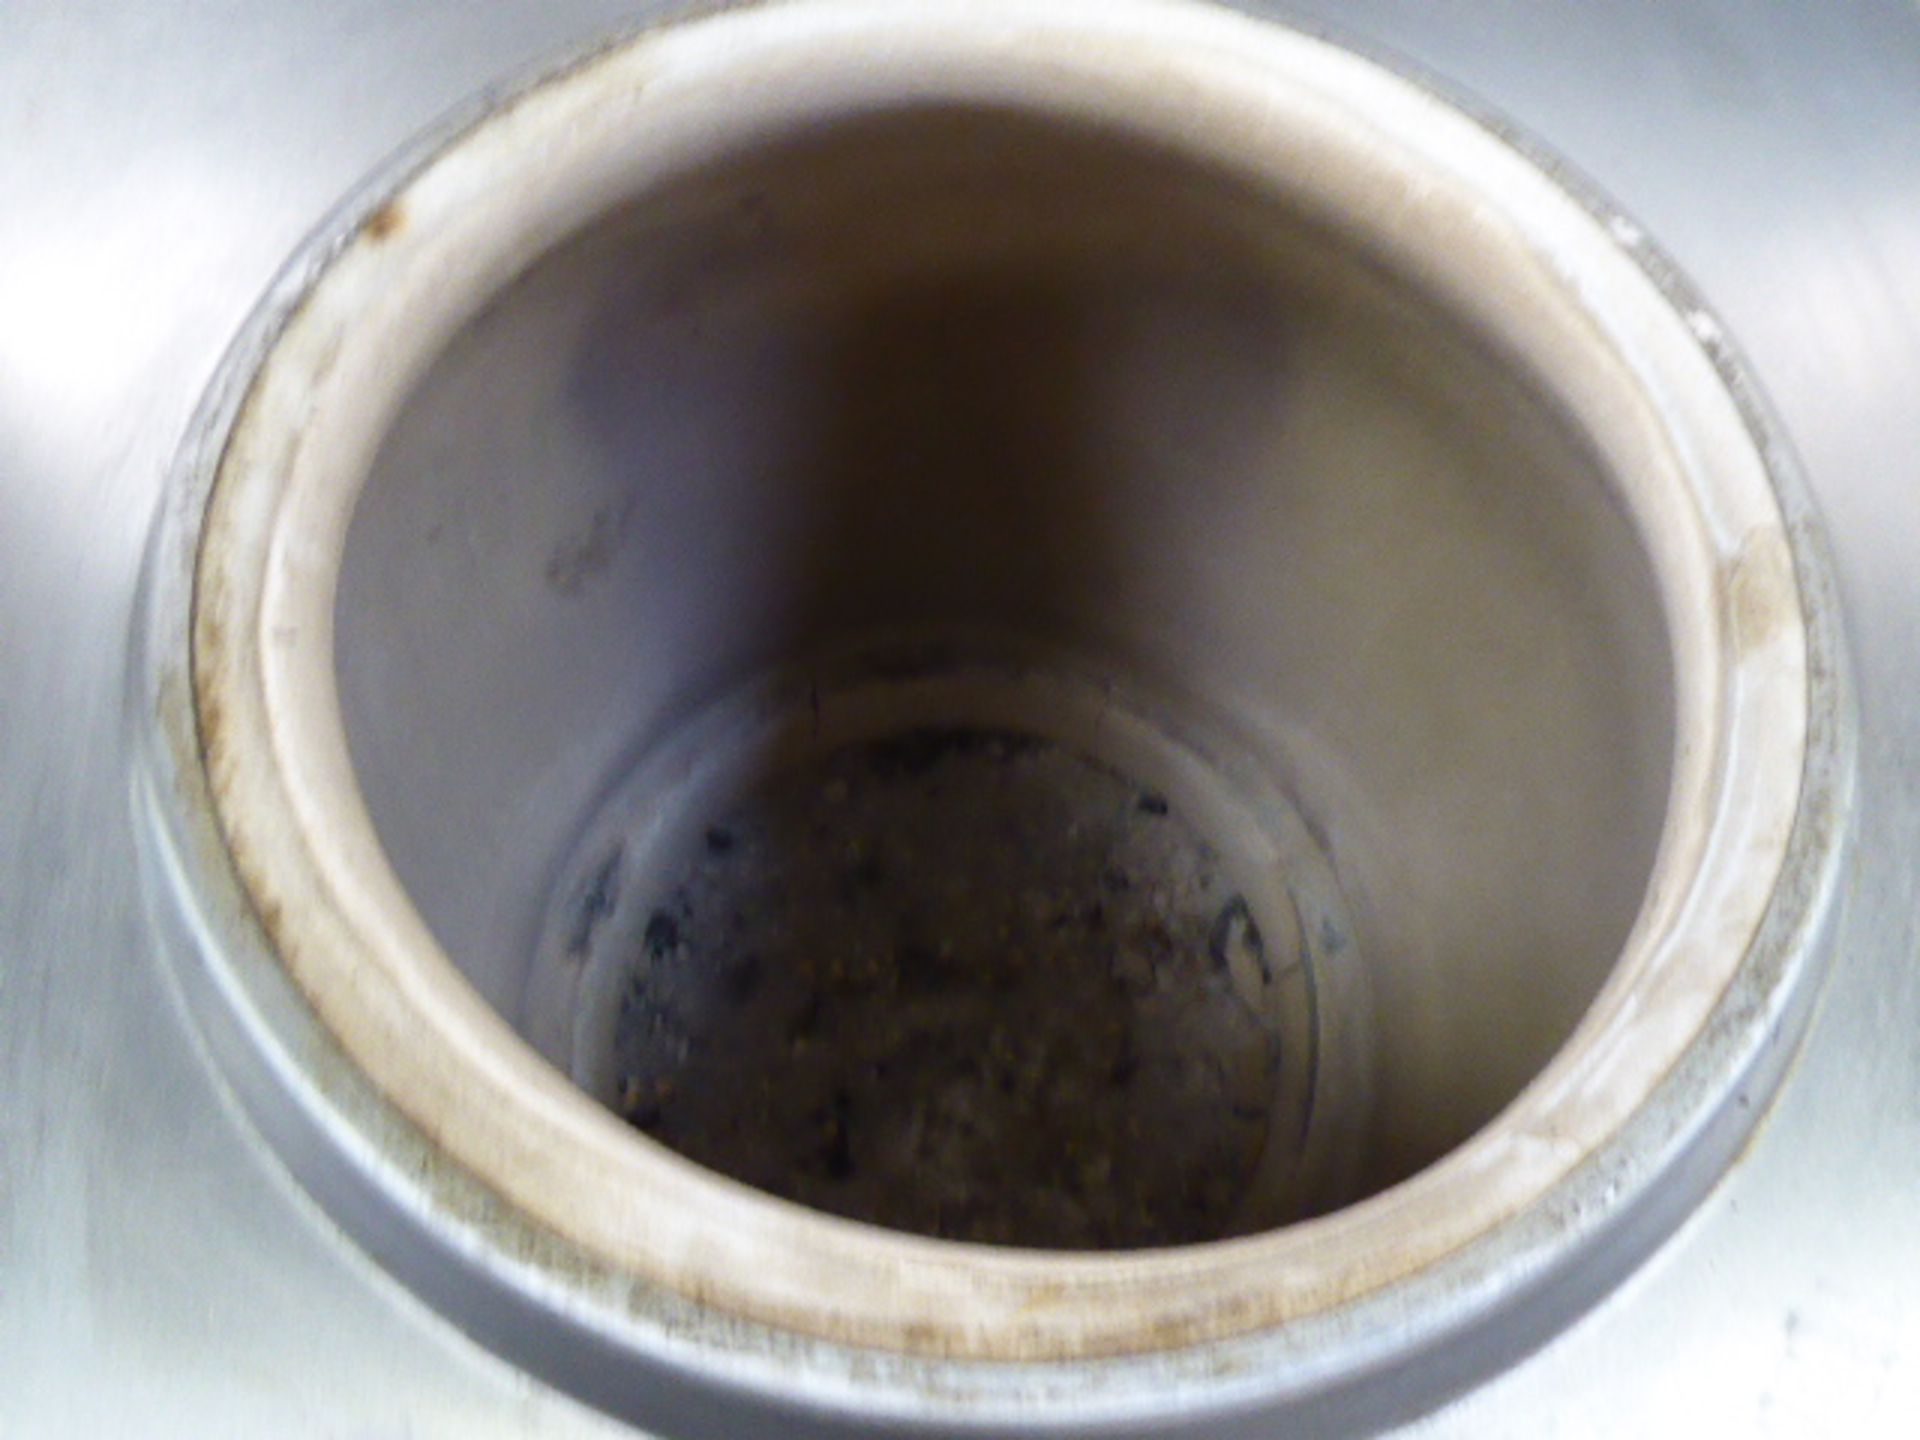 76cm charcoal tandoori oven - Image 2 of 2